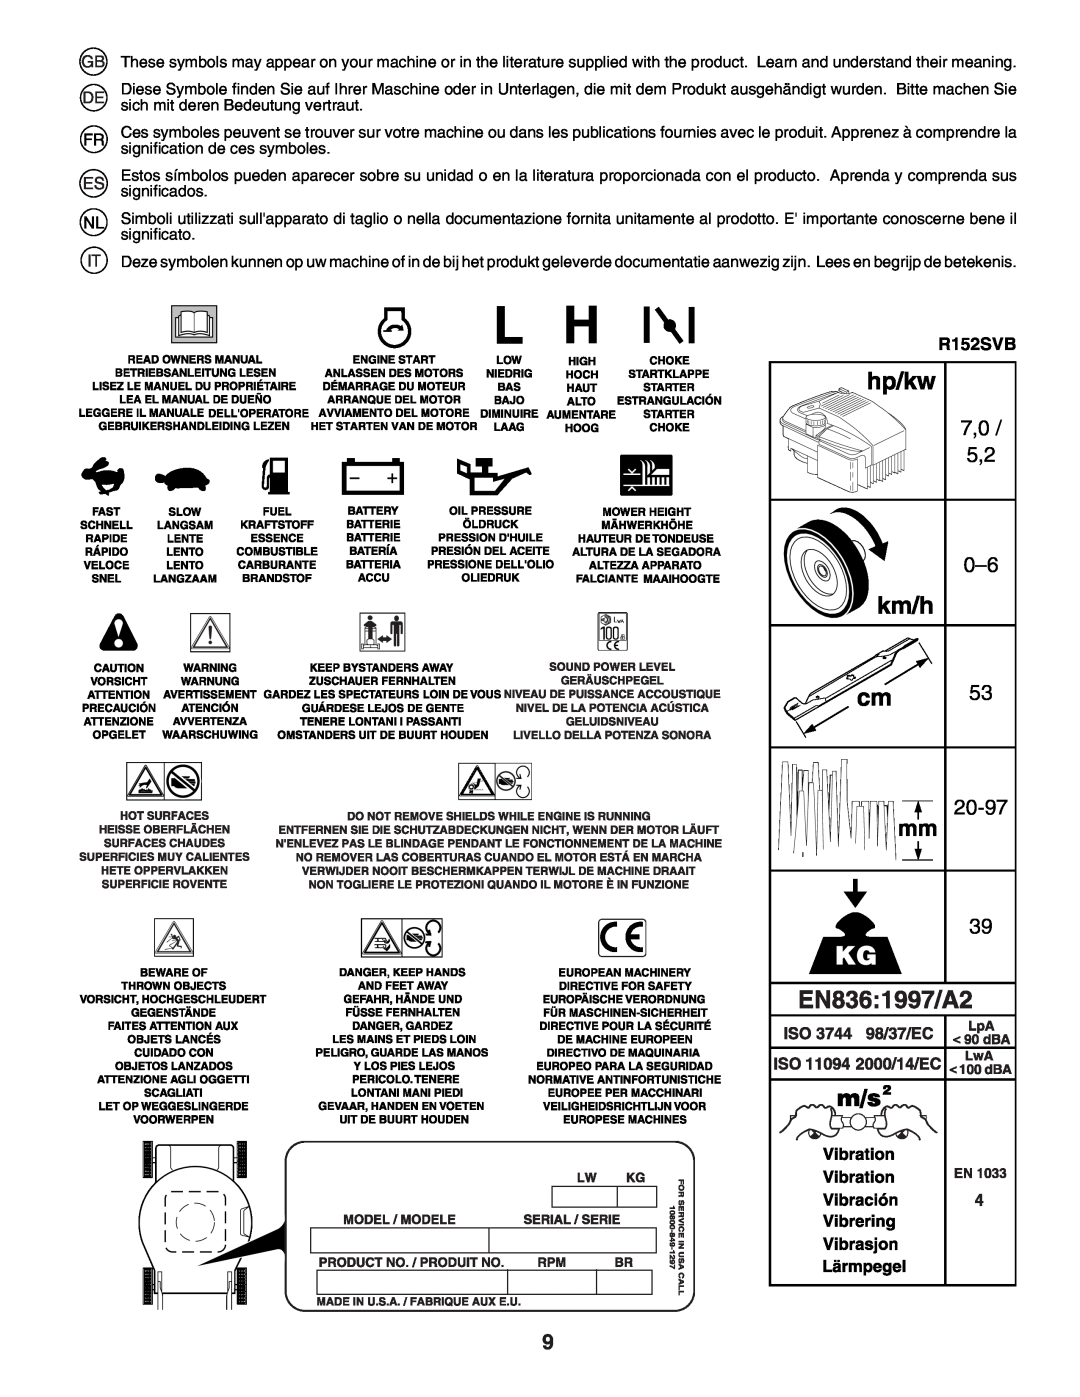 Husqvarna R152SVB instruction manual 20-97 